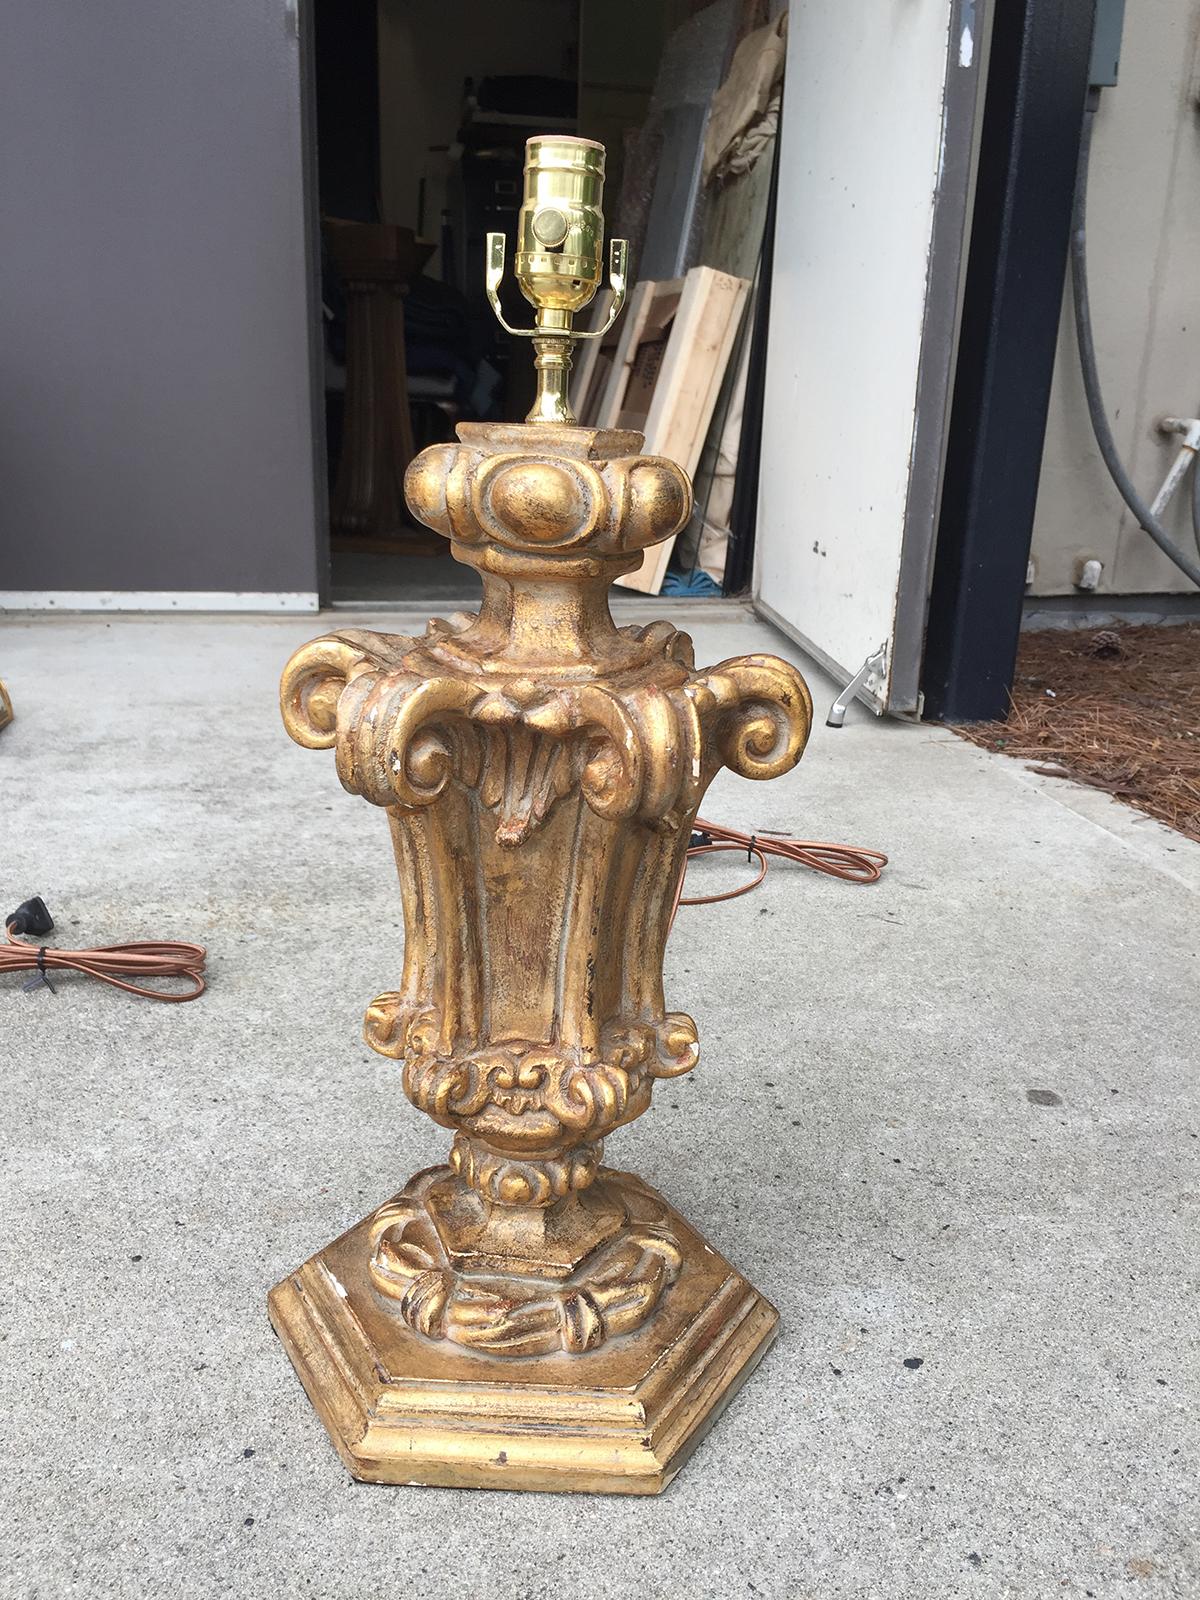 20th century Italian giltwood urn as lamp
New wiring.